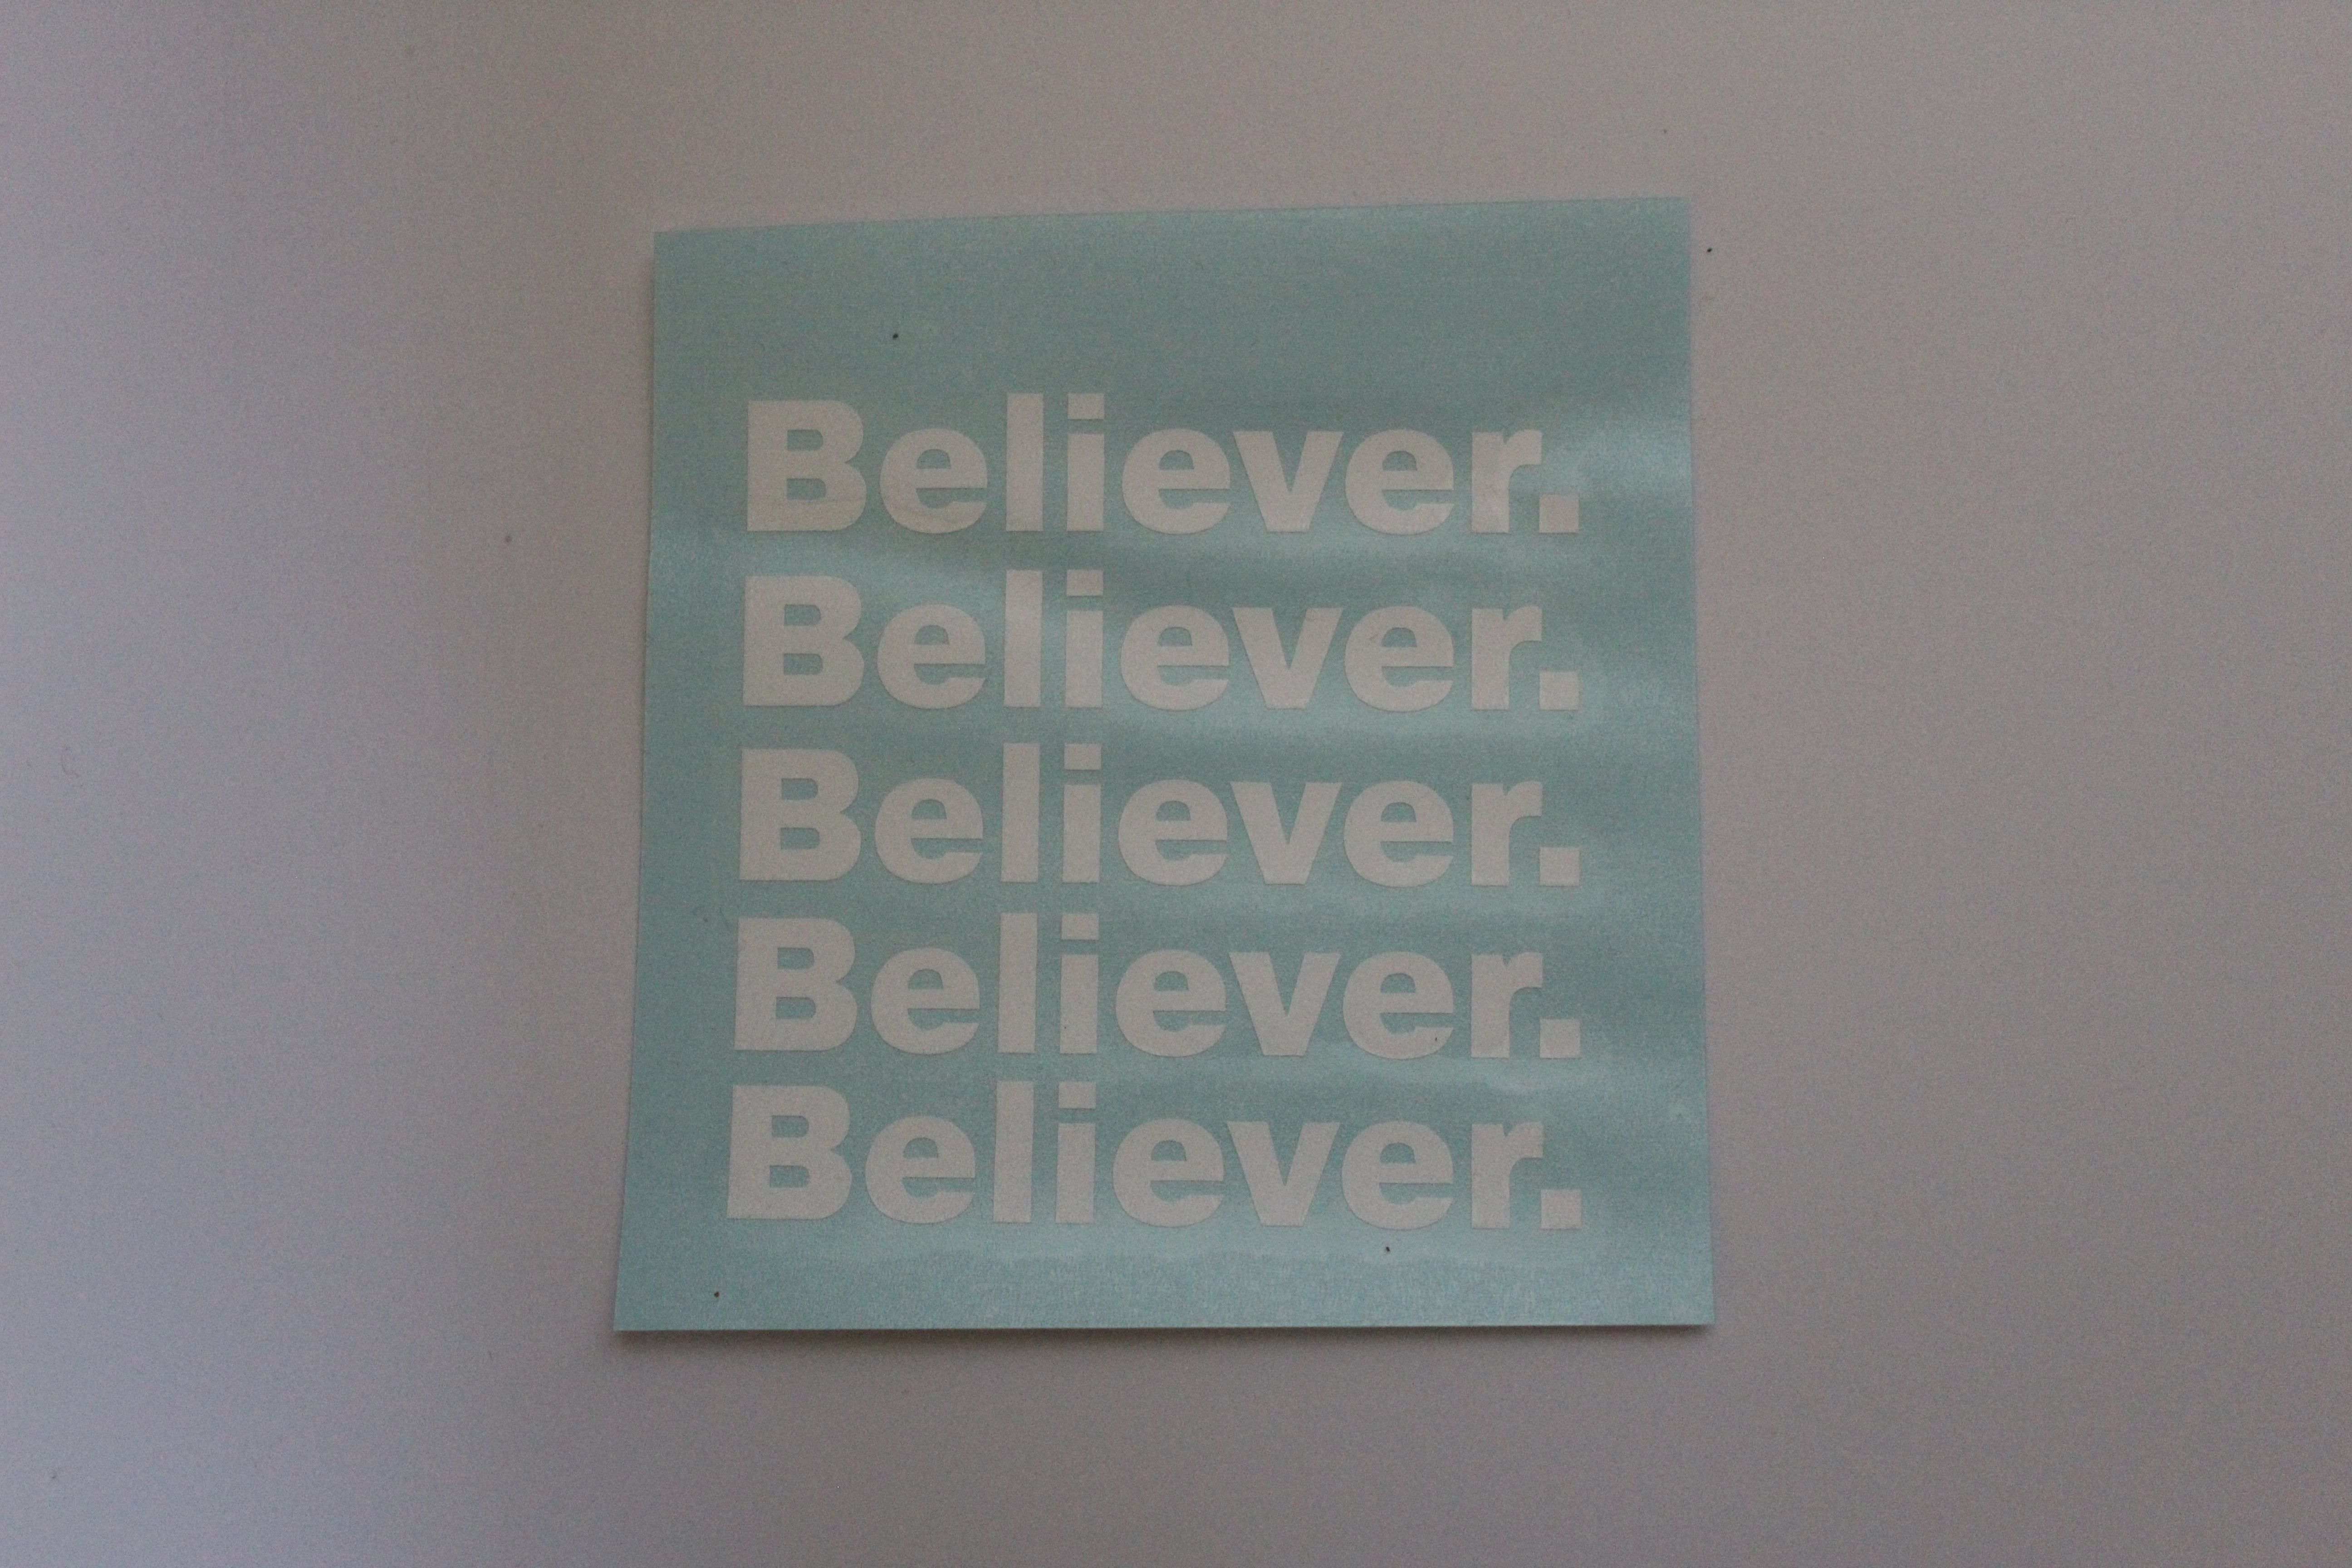 Believer. Transfer Stickers